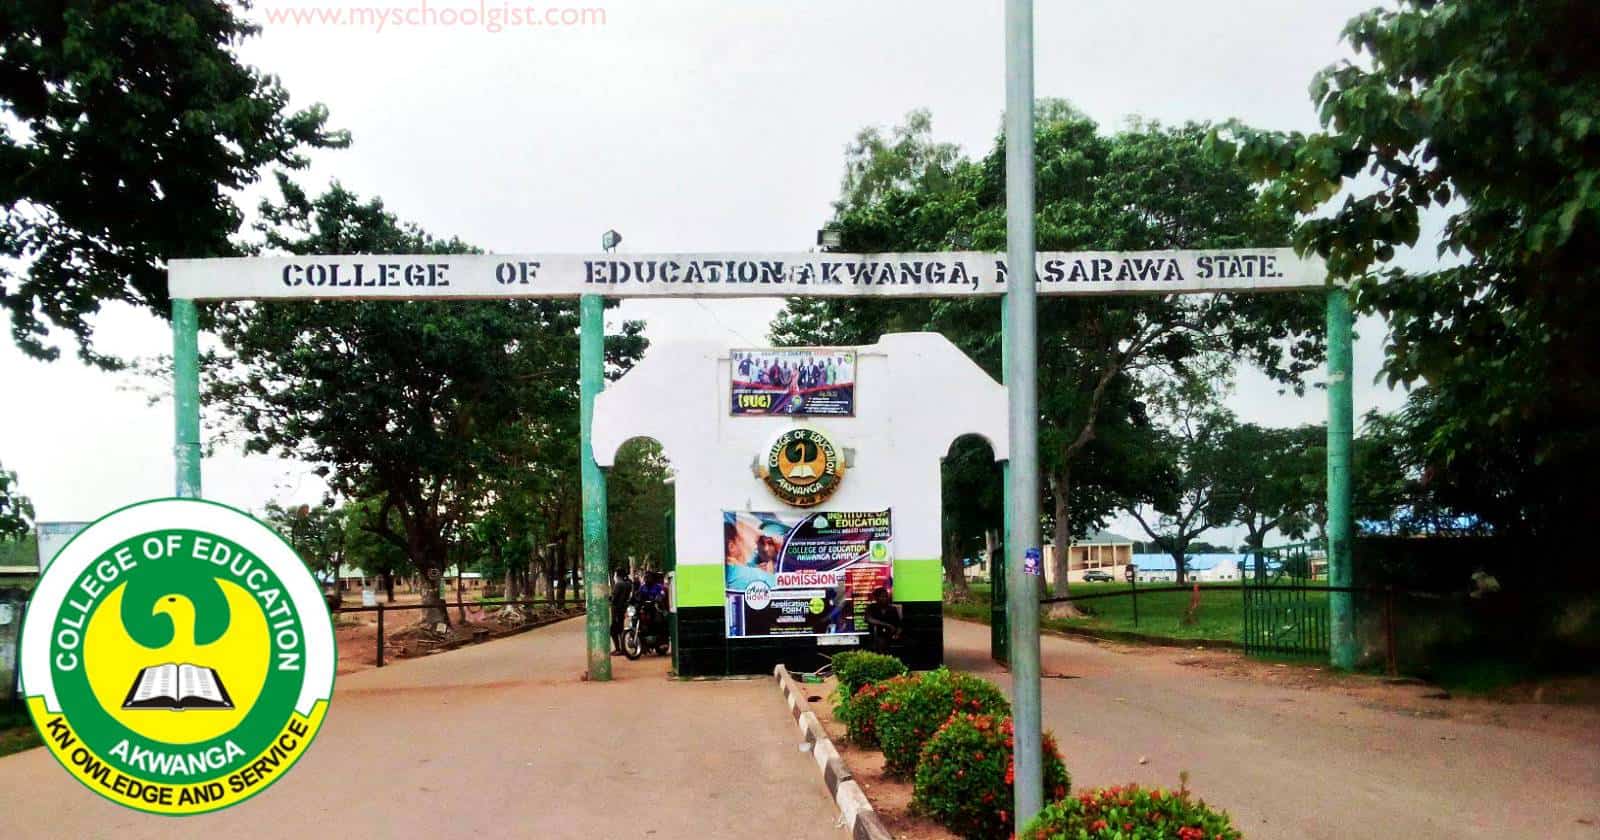 College of Education Akwanga Acceptance Fee/Registration Details